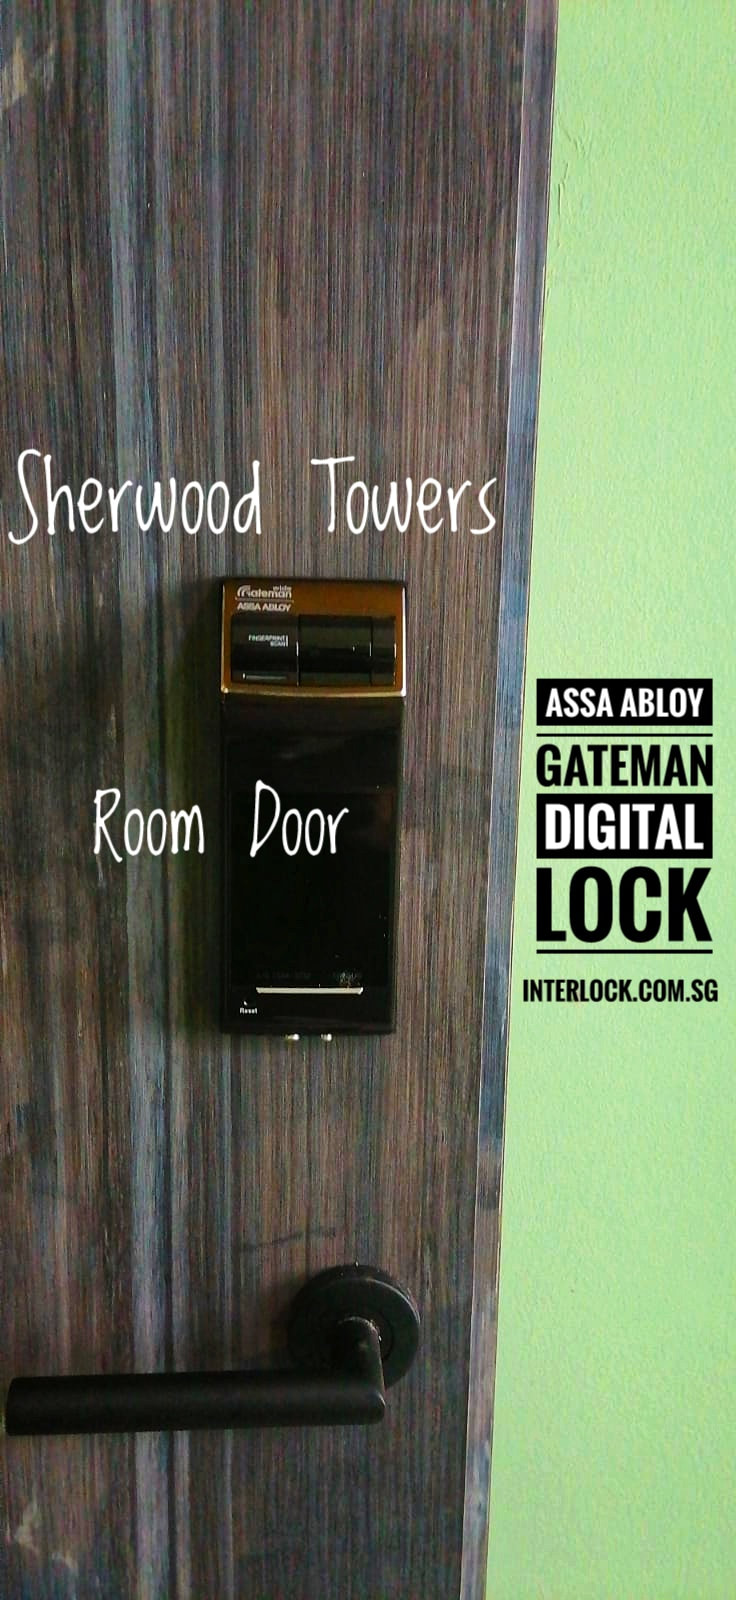 Assa Abloy Gateman Fingus digital lock at Sherwood Towers Front of the door